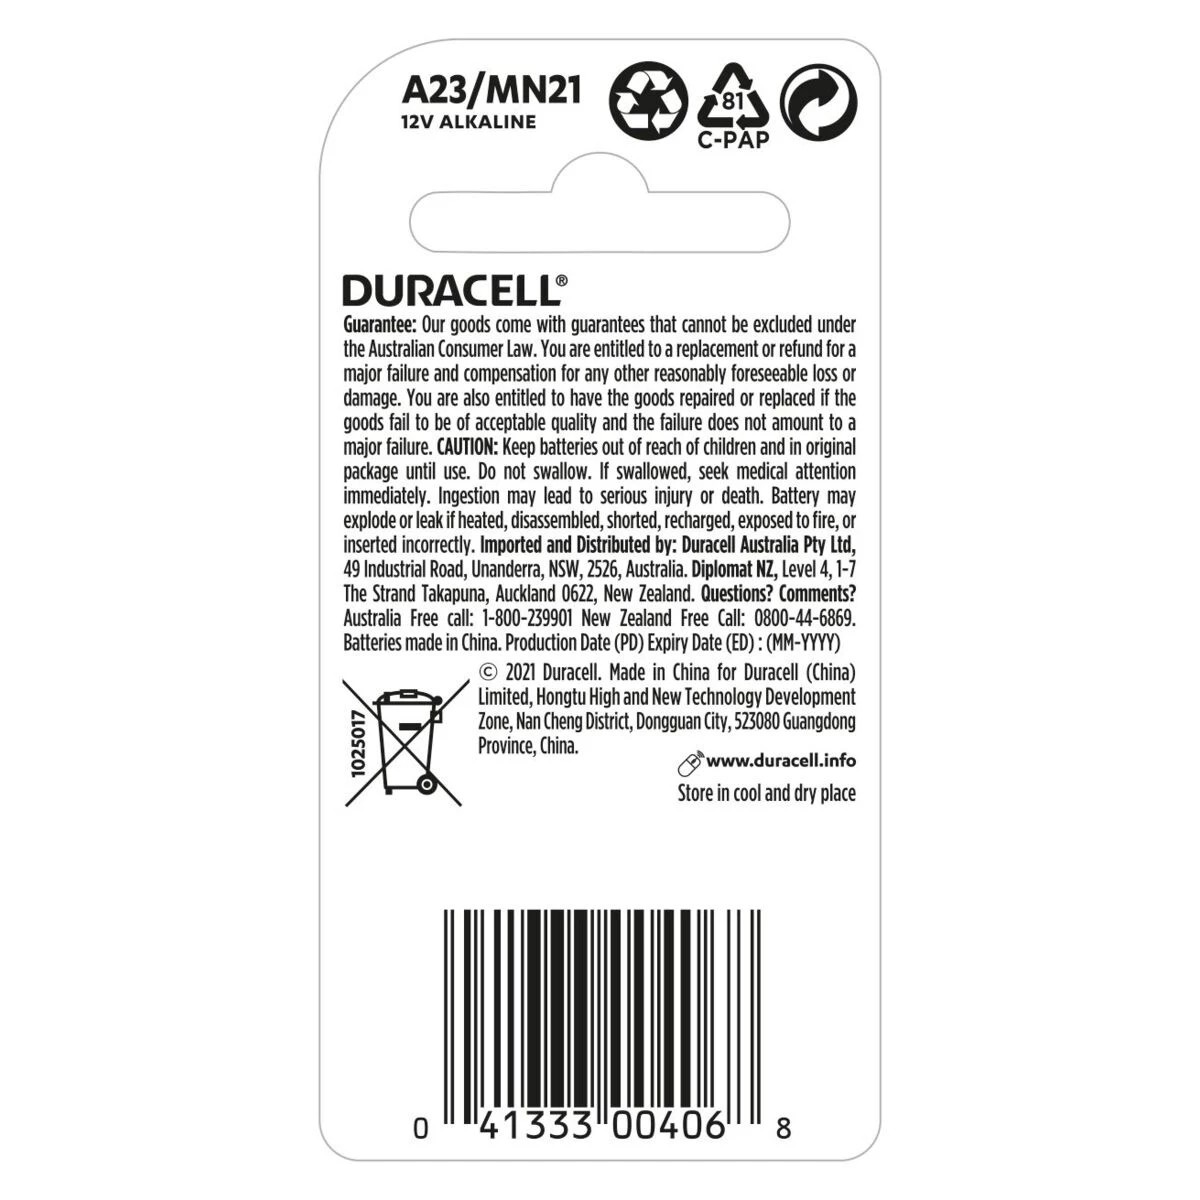 Specialty MN21 alkaline batteries - Duracell